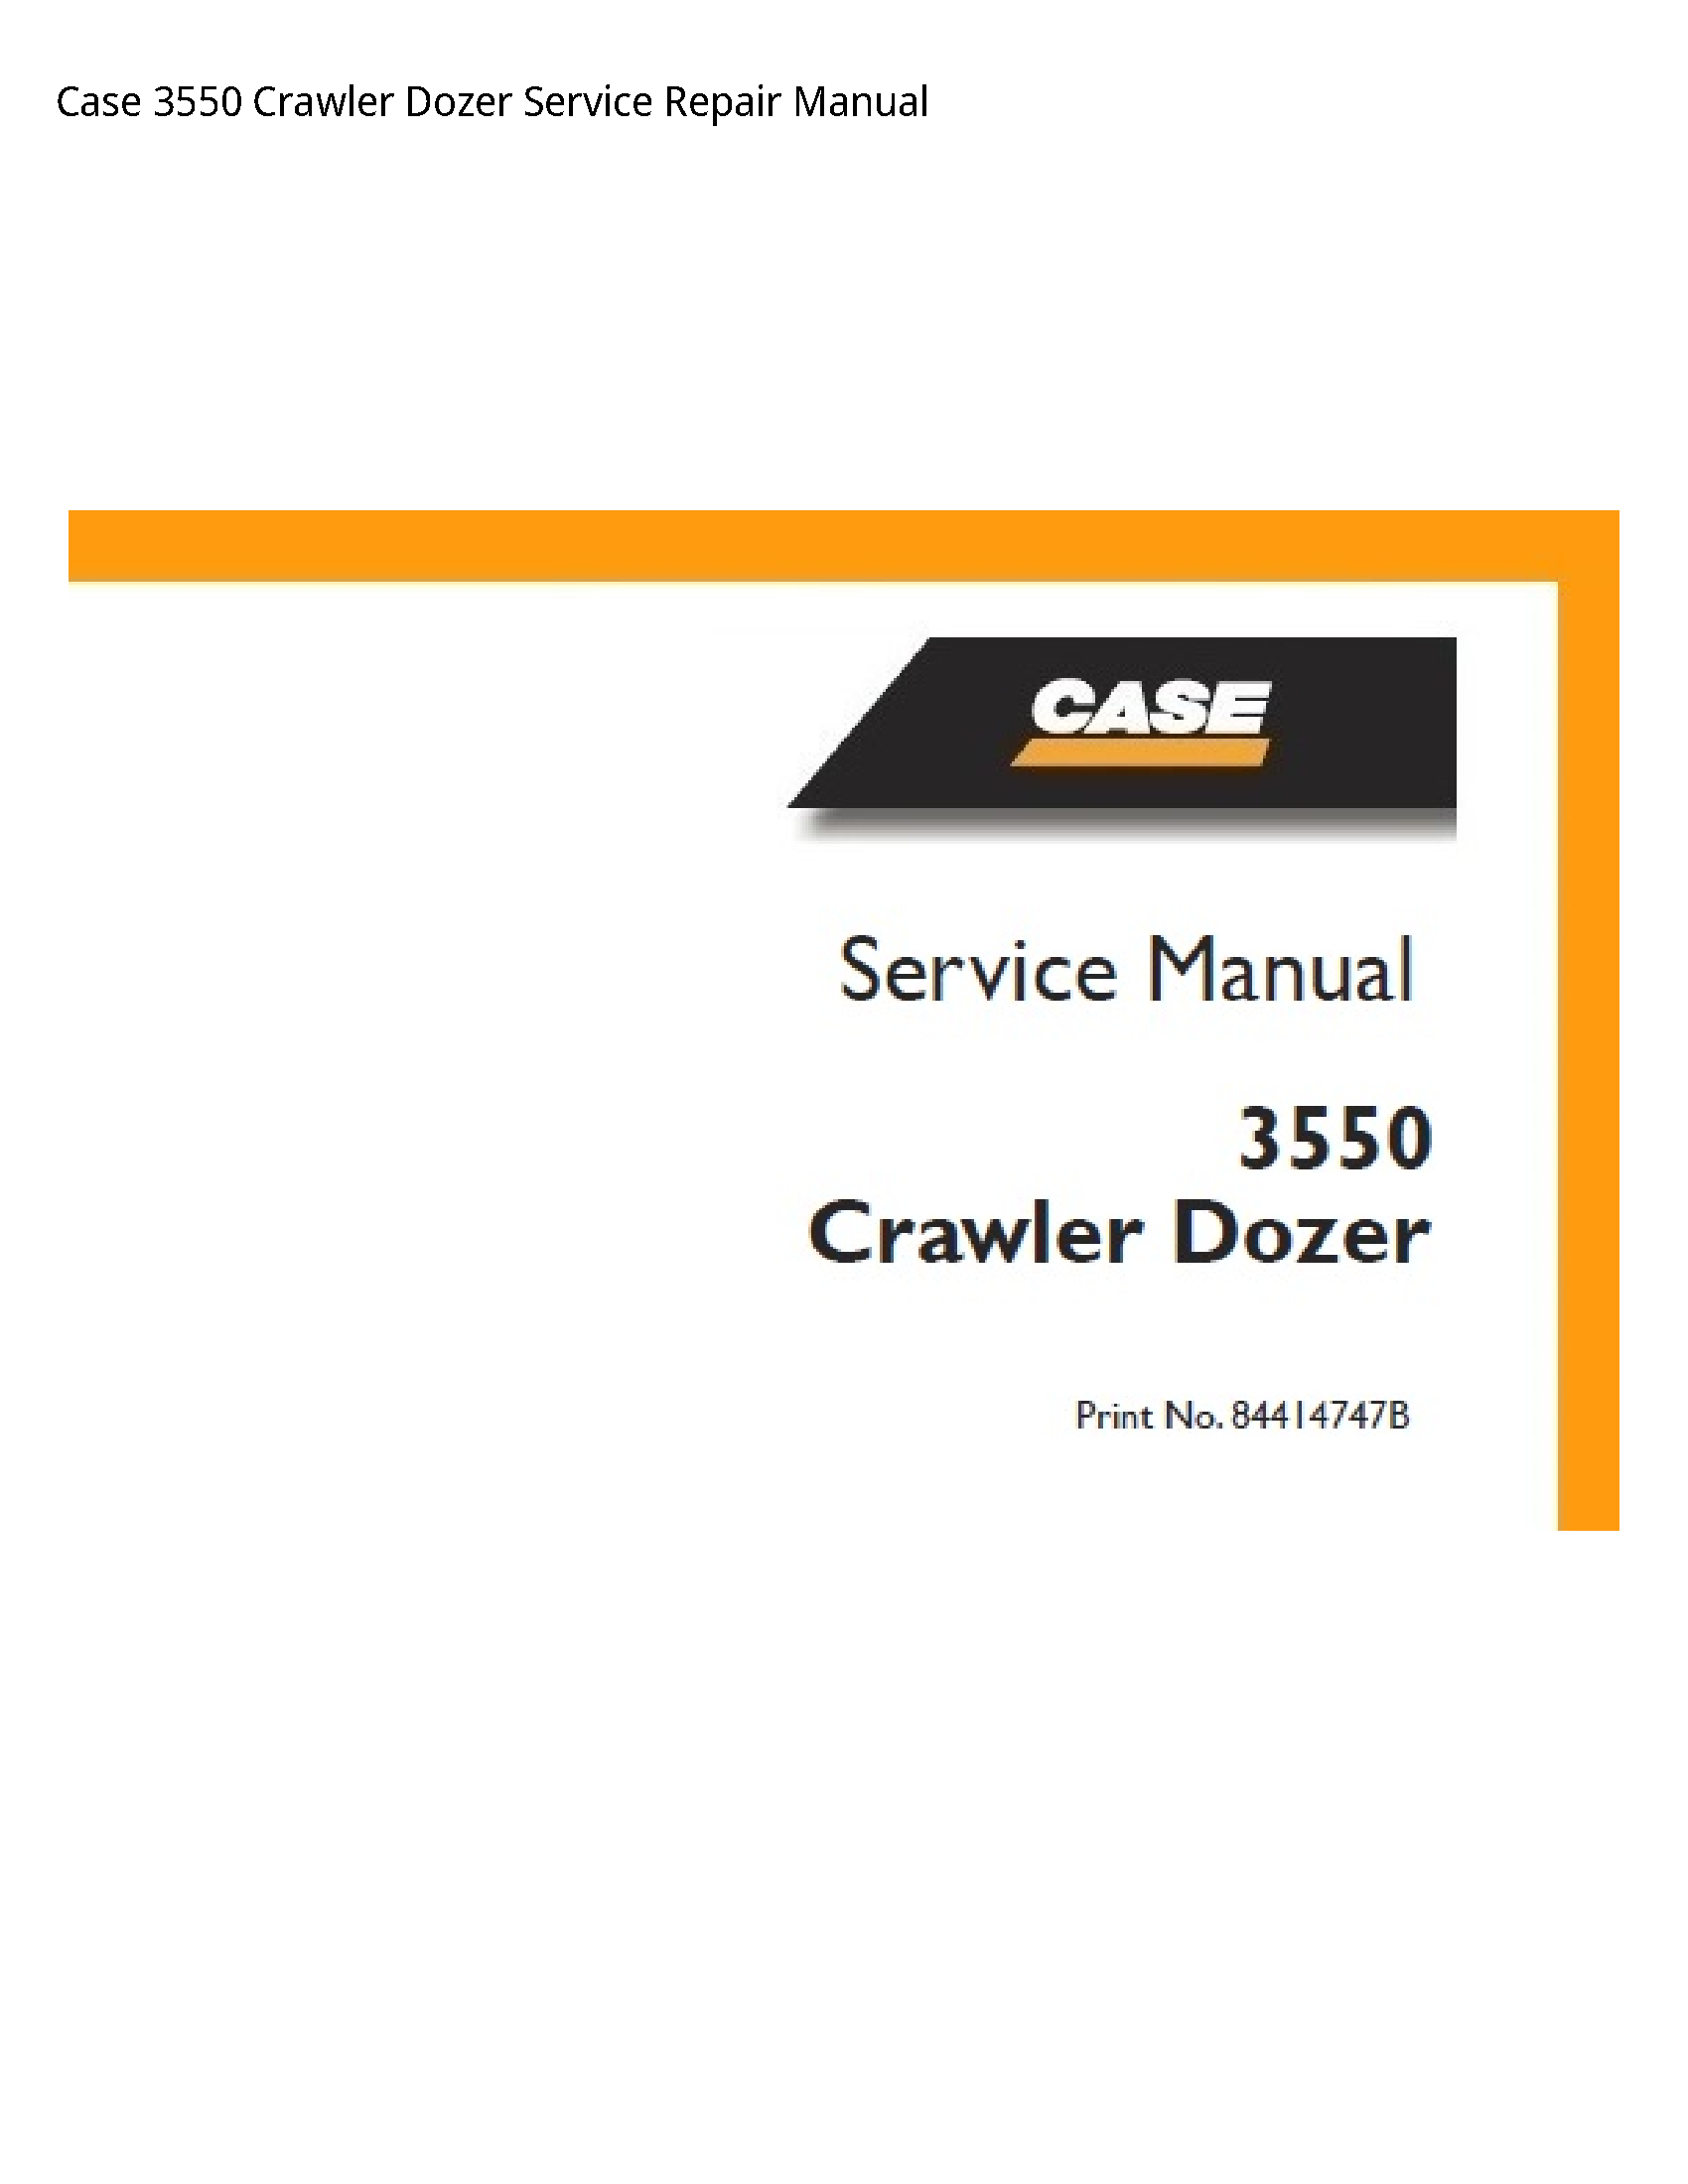 Case/Case IH 3550 Crawler Dozer manual